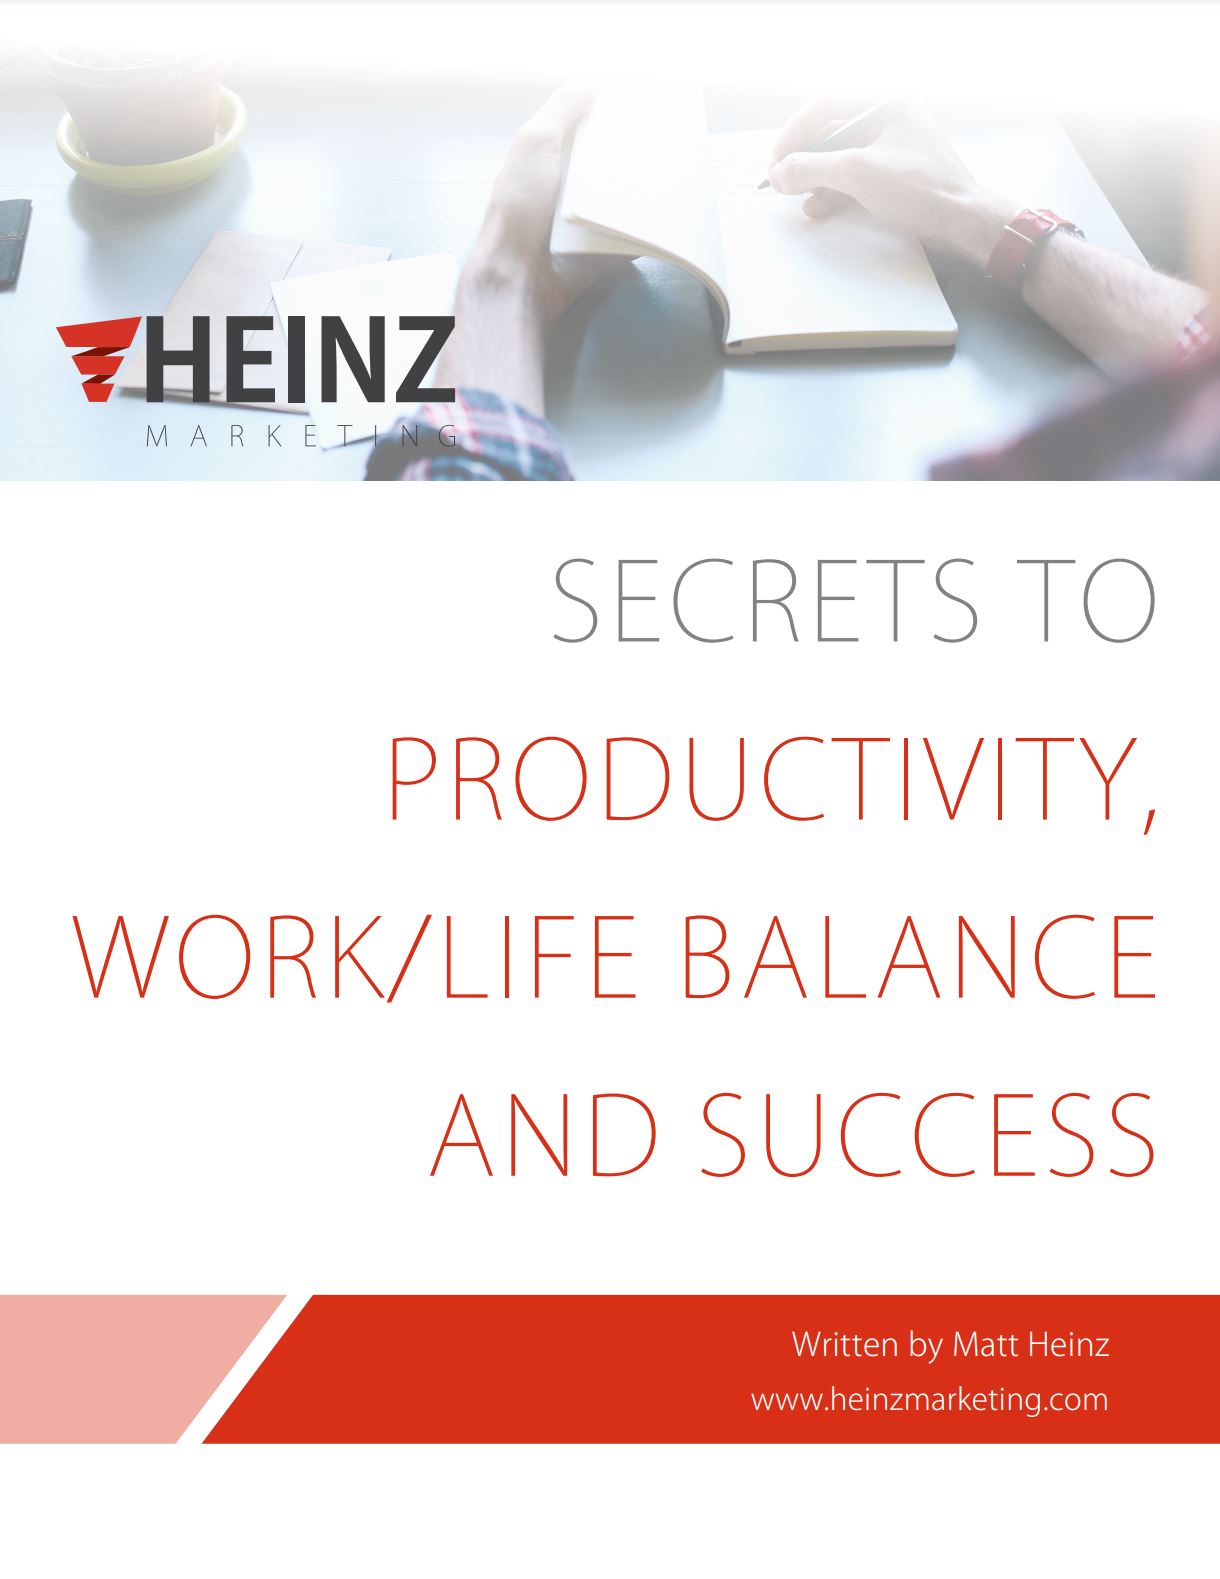 Secrets to Productivity, Work/Life Balance and Success